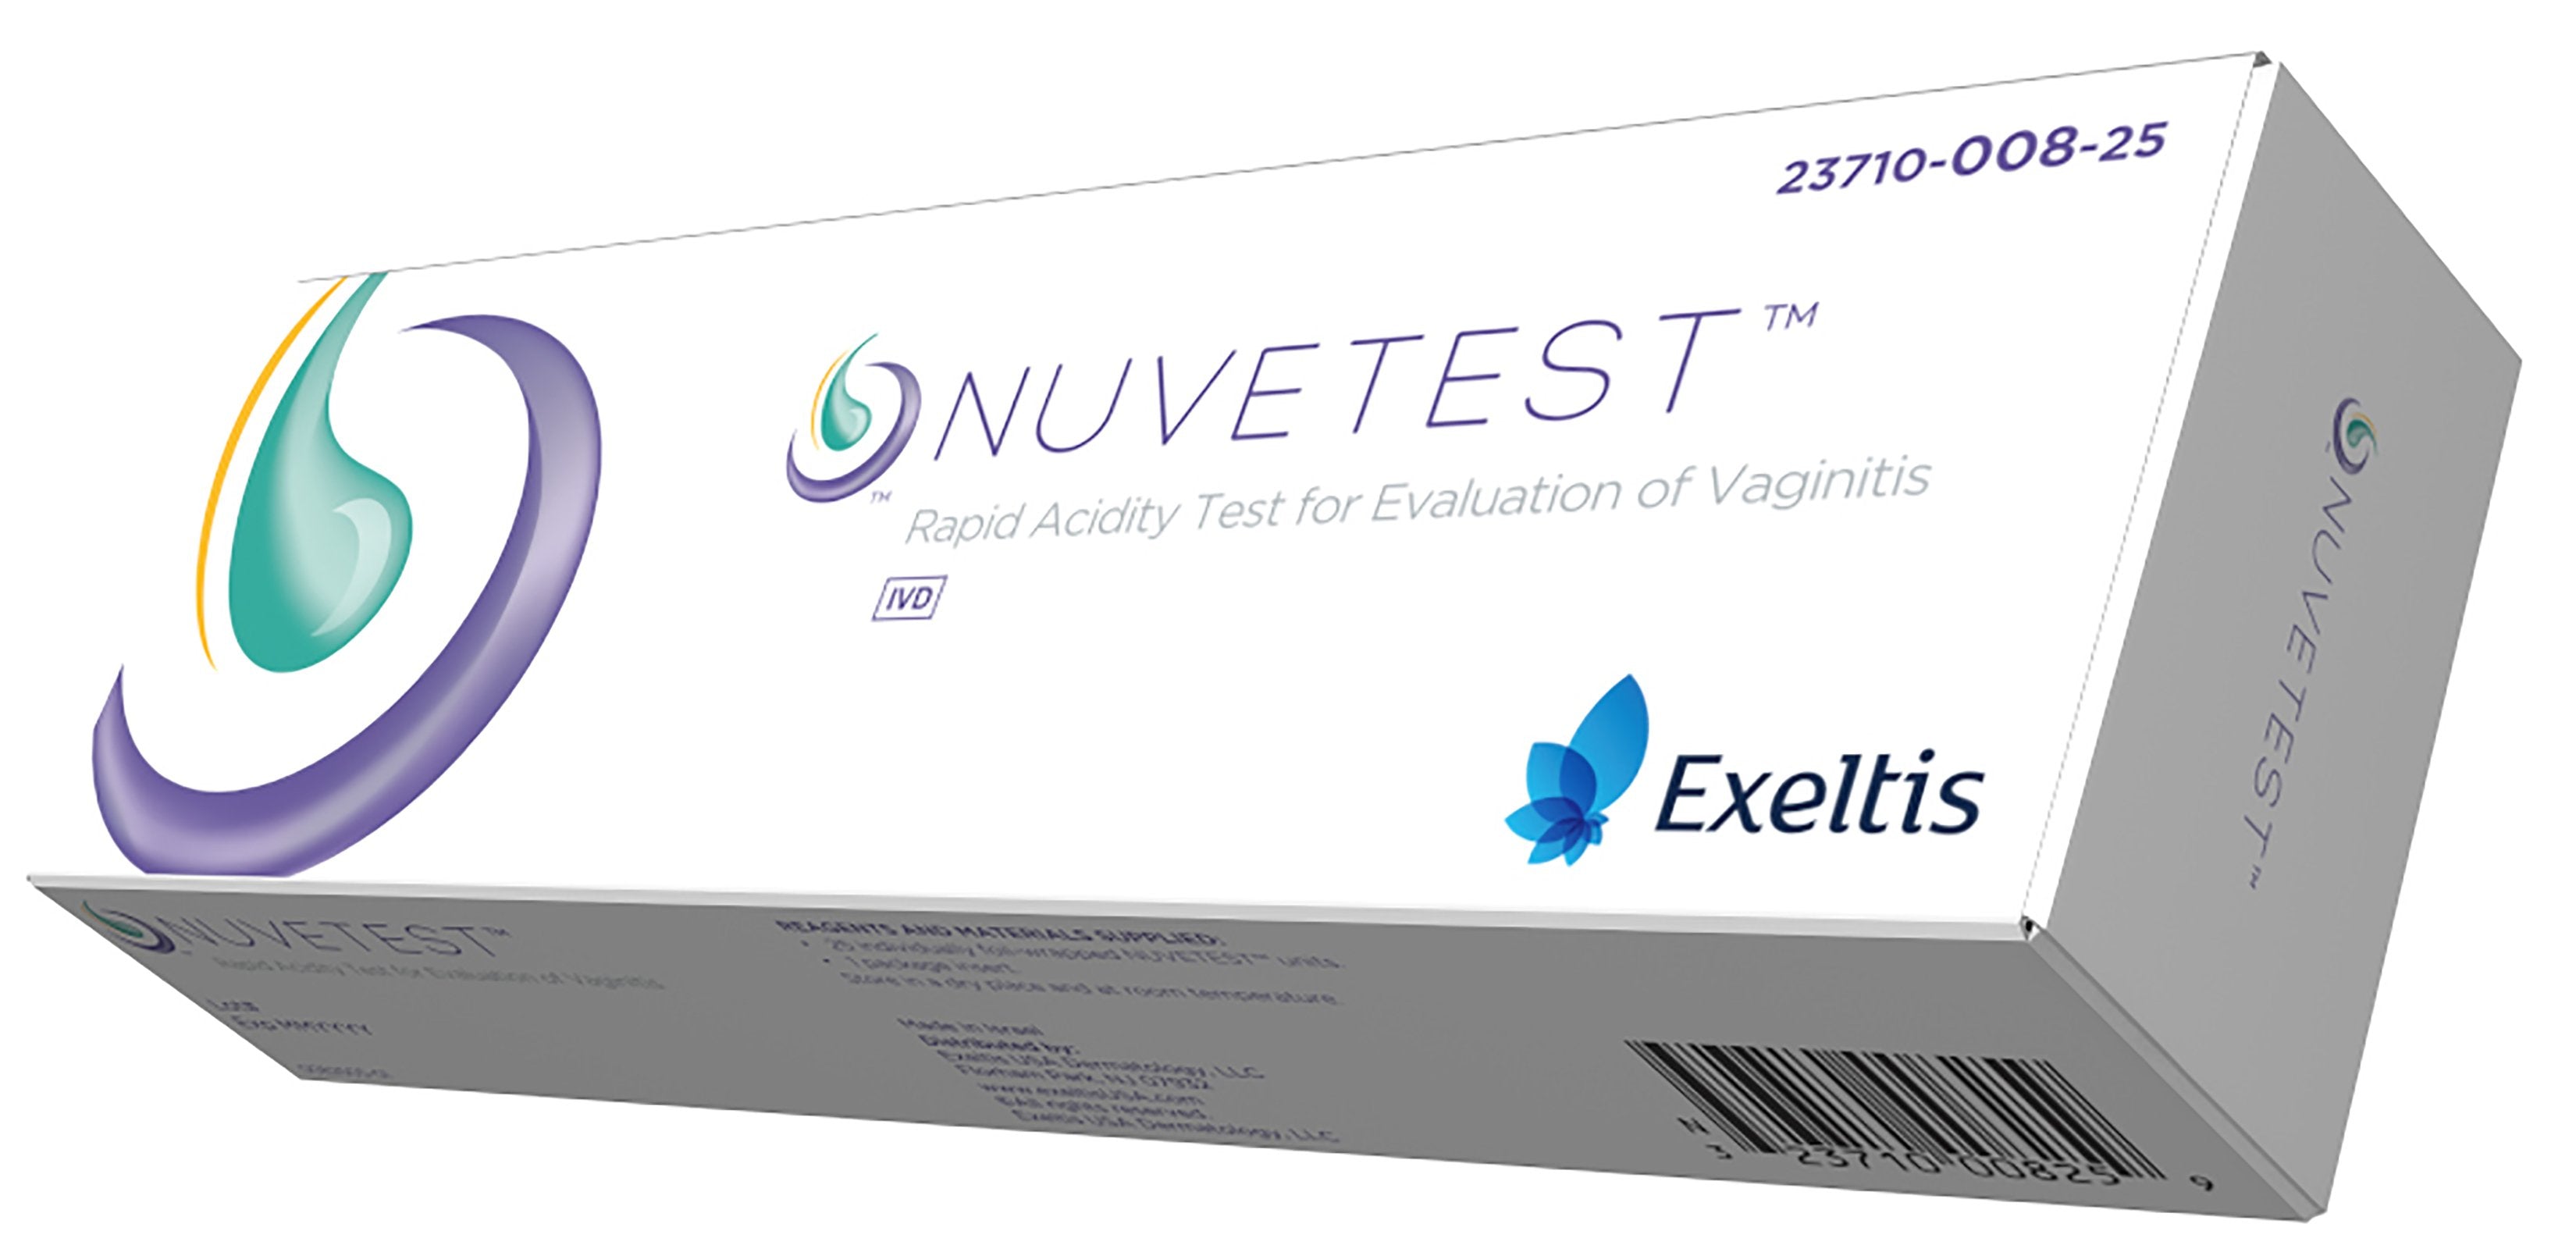 Sexual Health Test Kit NuveTest Rapid Acidity Test Bacterial Vaginosis (BV) / Trichomoniasis Test Vaginal Secretion Sample 25 Tests CLIA Waived